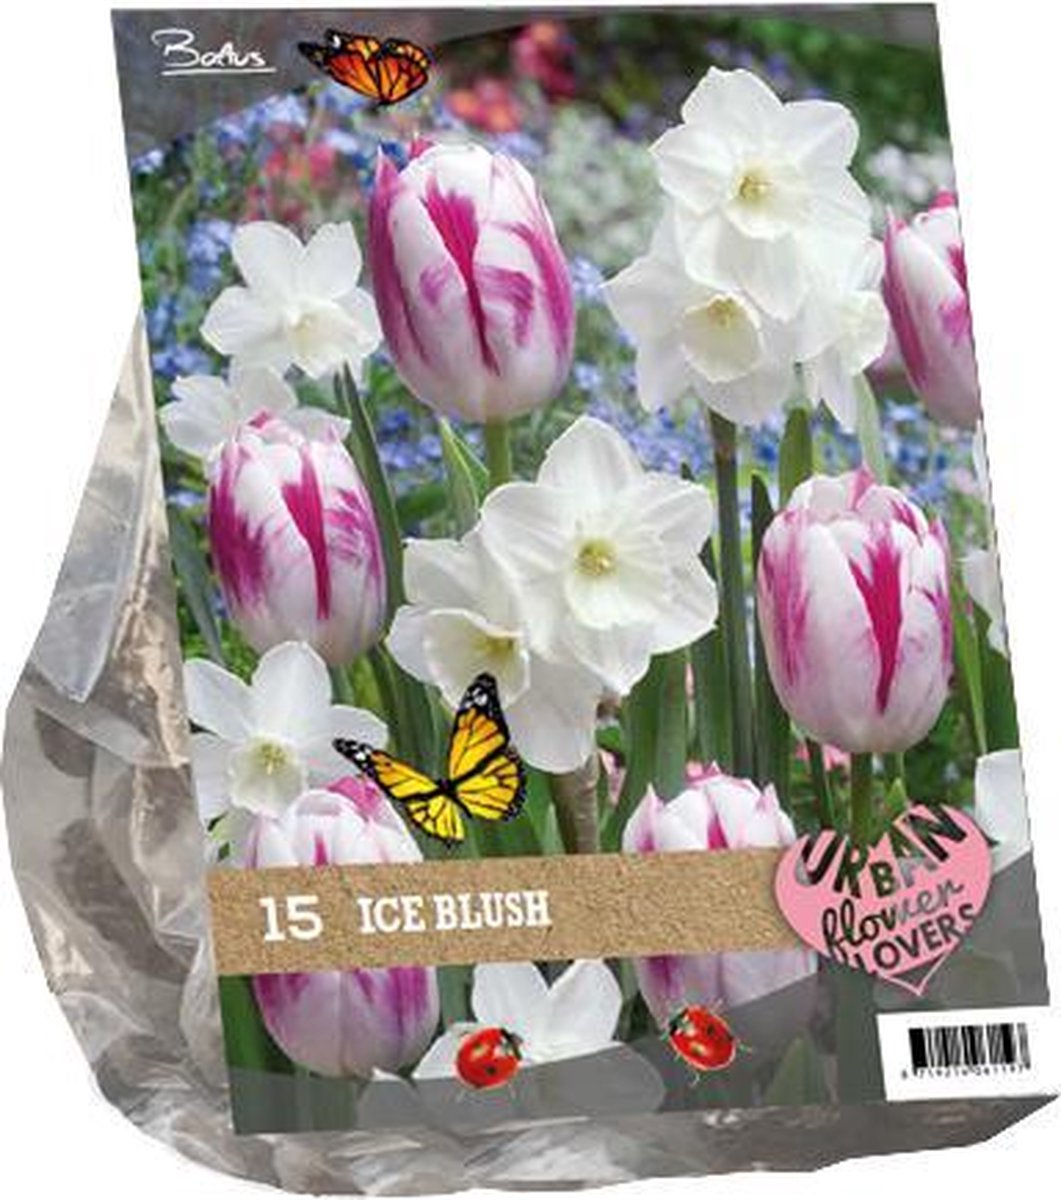 Bloembollen - Urban Flowers - Ice blush - 1 x 15 bloembollen